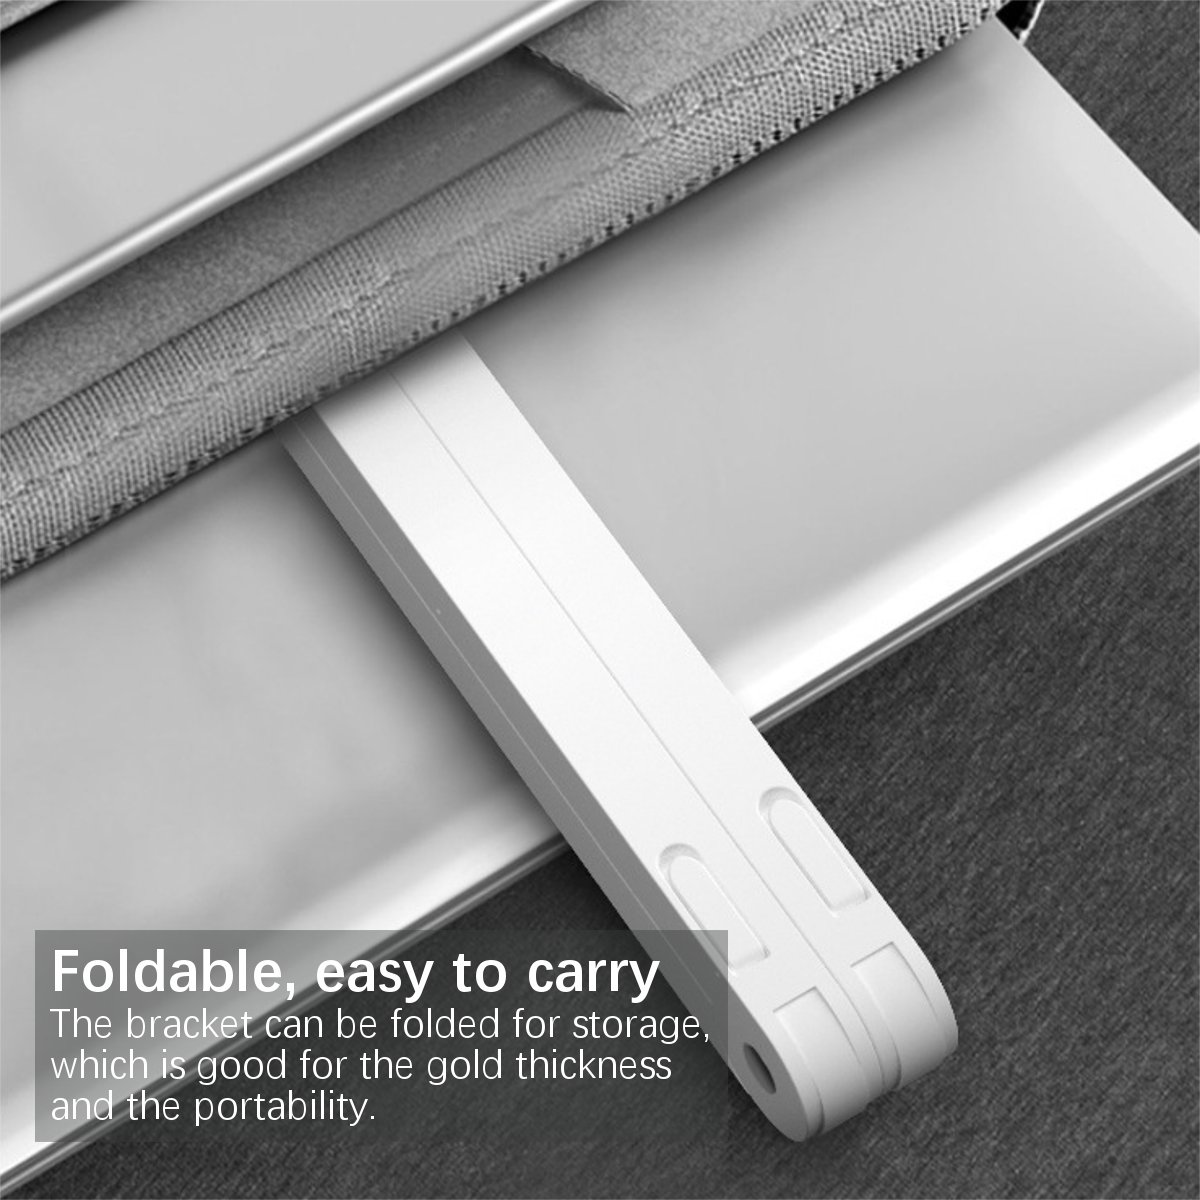 Portable Laptop Stand Foldable Adjustable Non-slip Notebook Holder Tablet